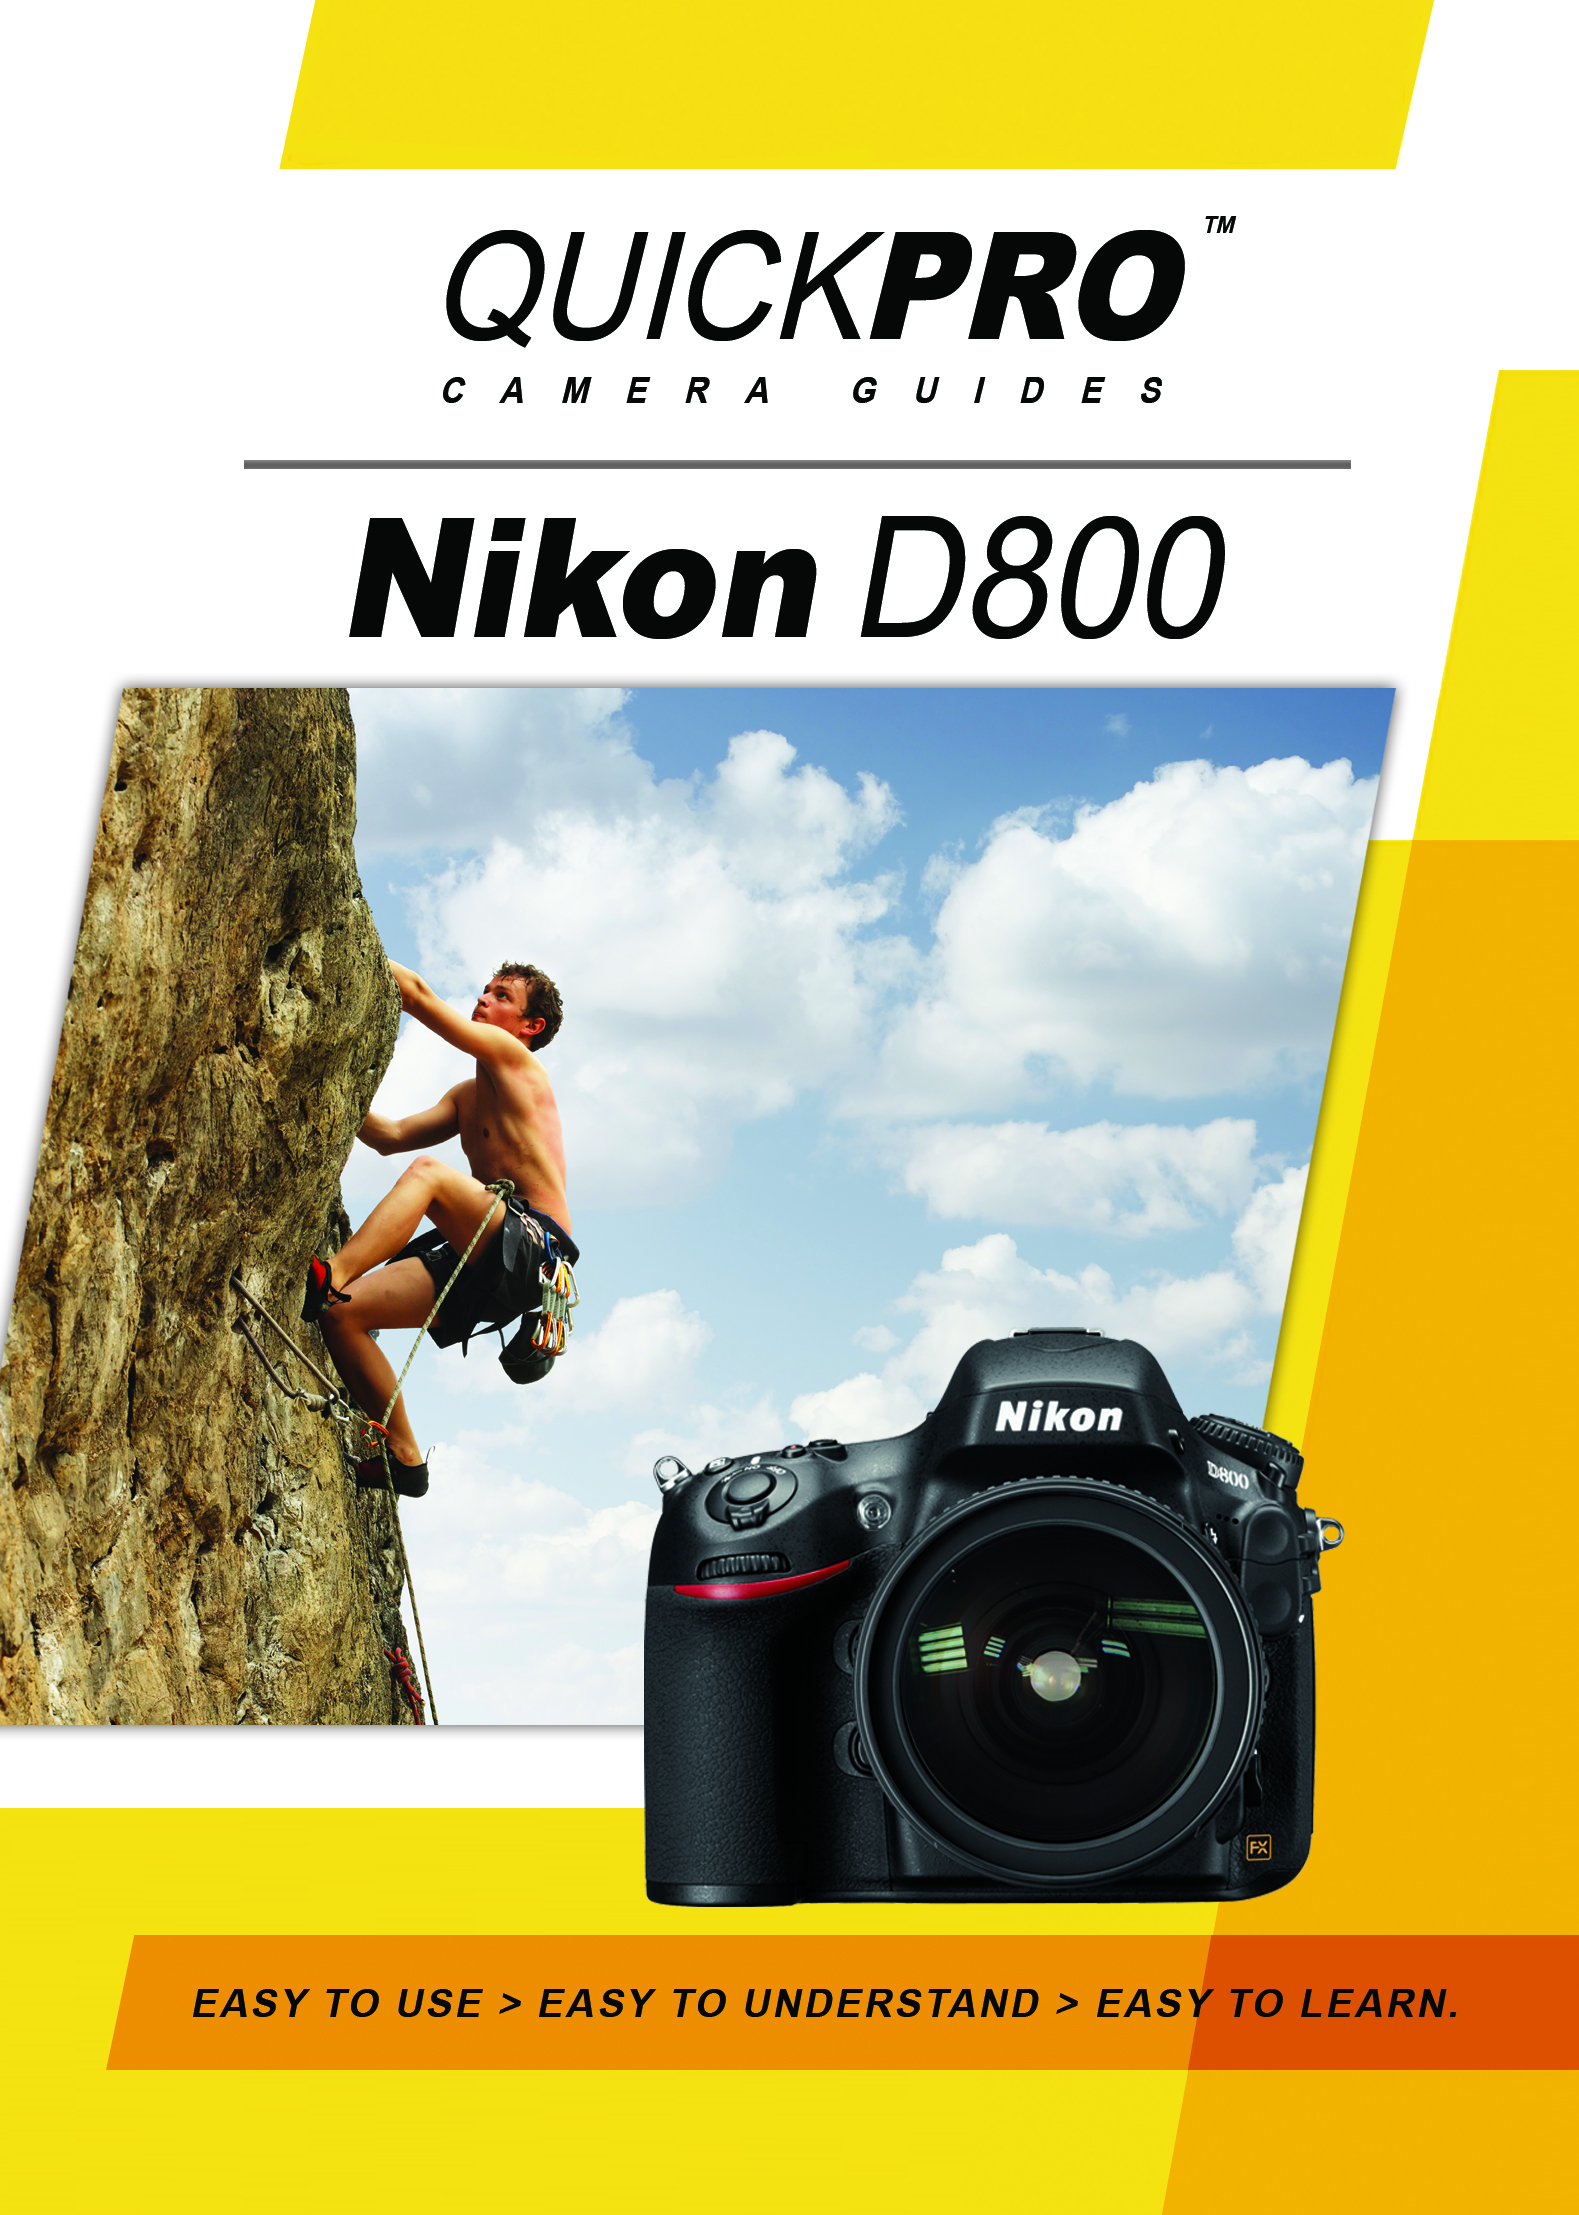 shooting video with nikon d800 tutorial